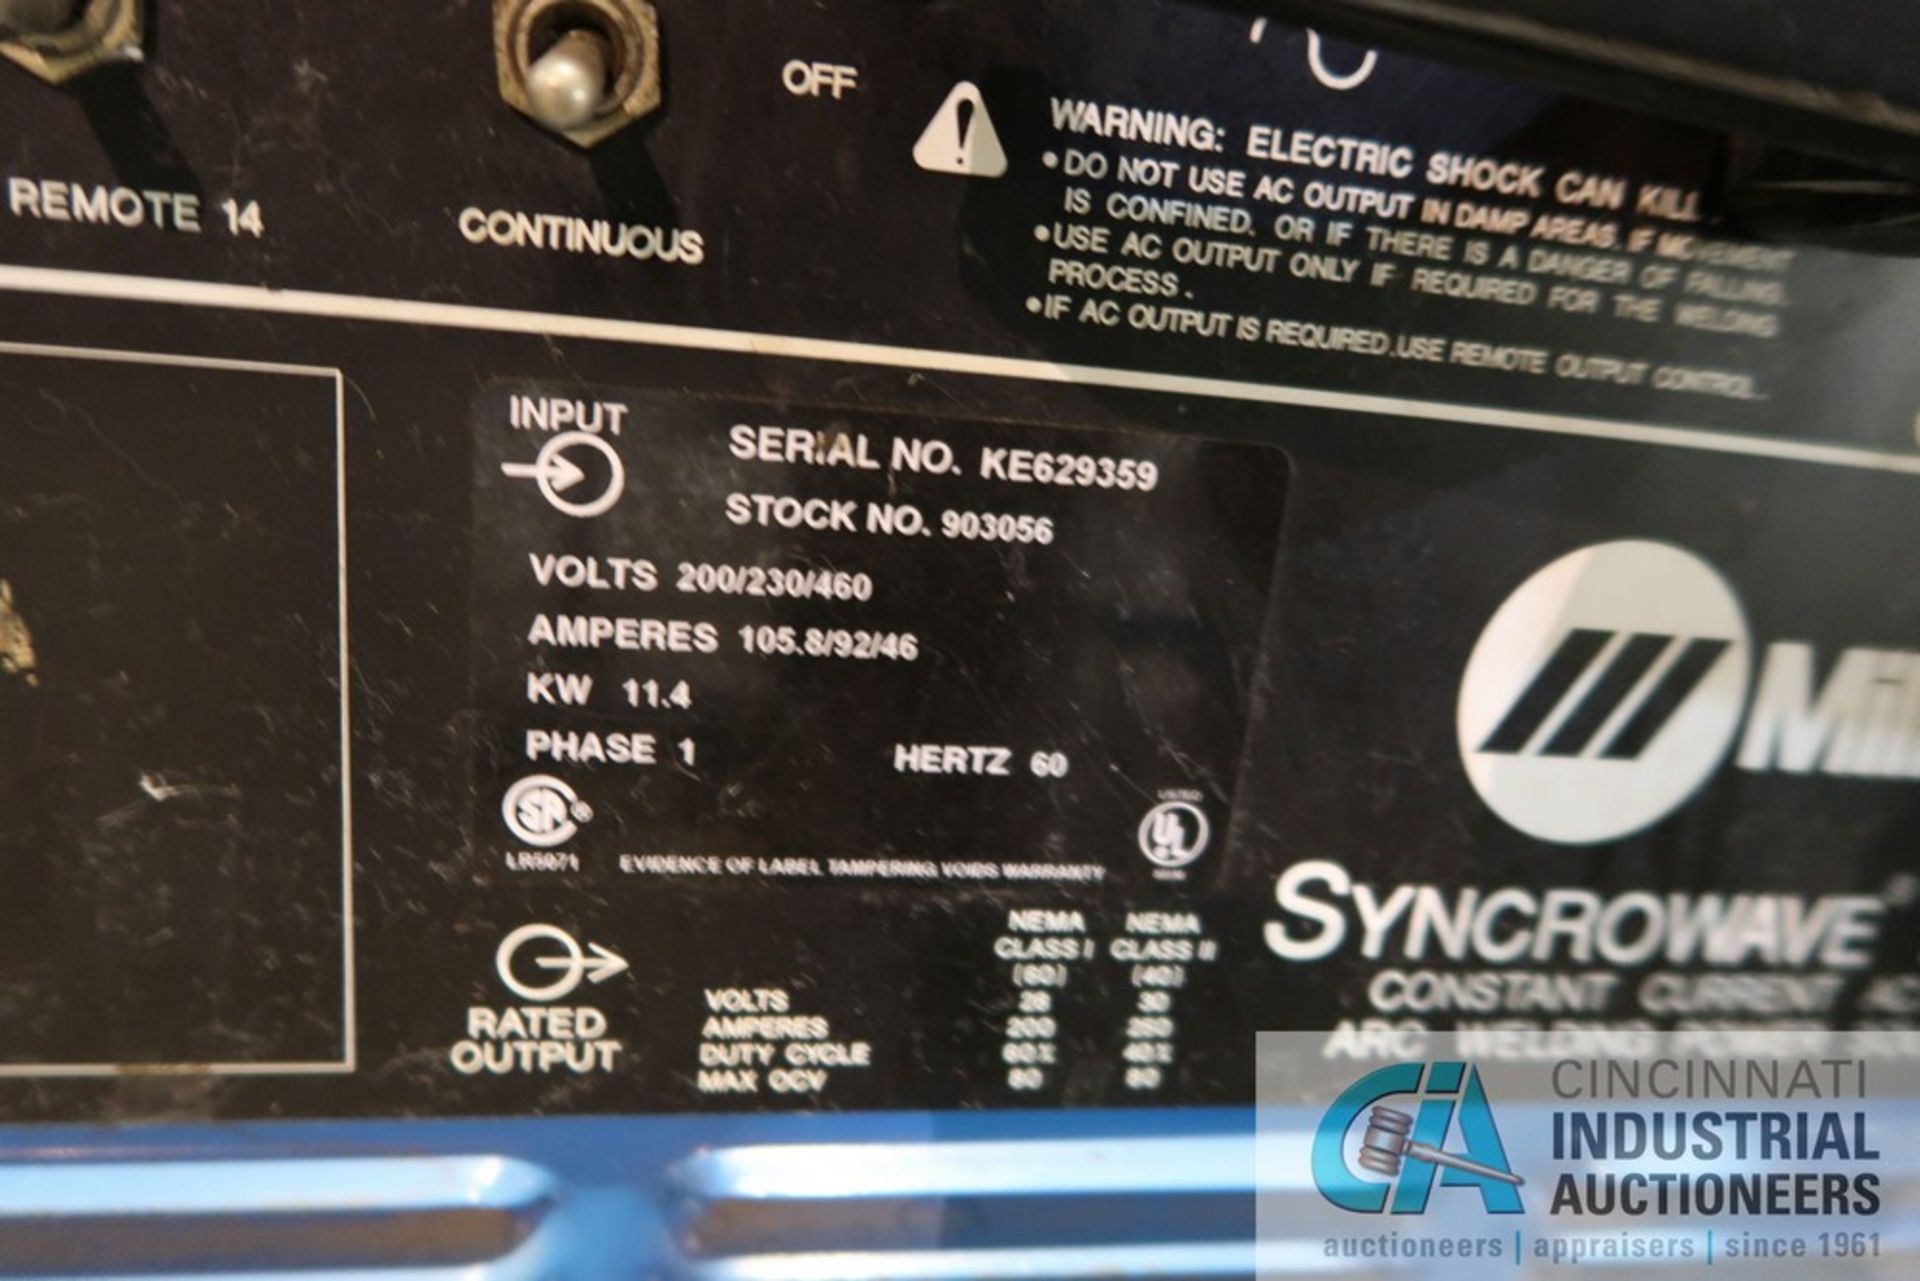 250 AMP MILLER MODEL SYNCROWAVE 250 CONSTANT CURRENT AC/DC ARC WELDING POWER SOURCE S/N KE629359 - Image 4 of 4